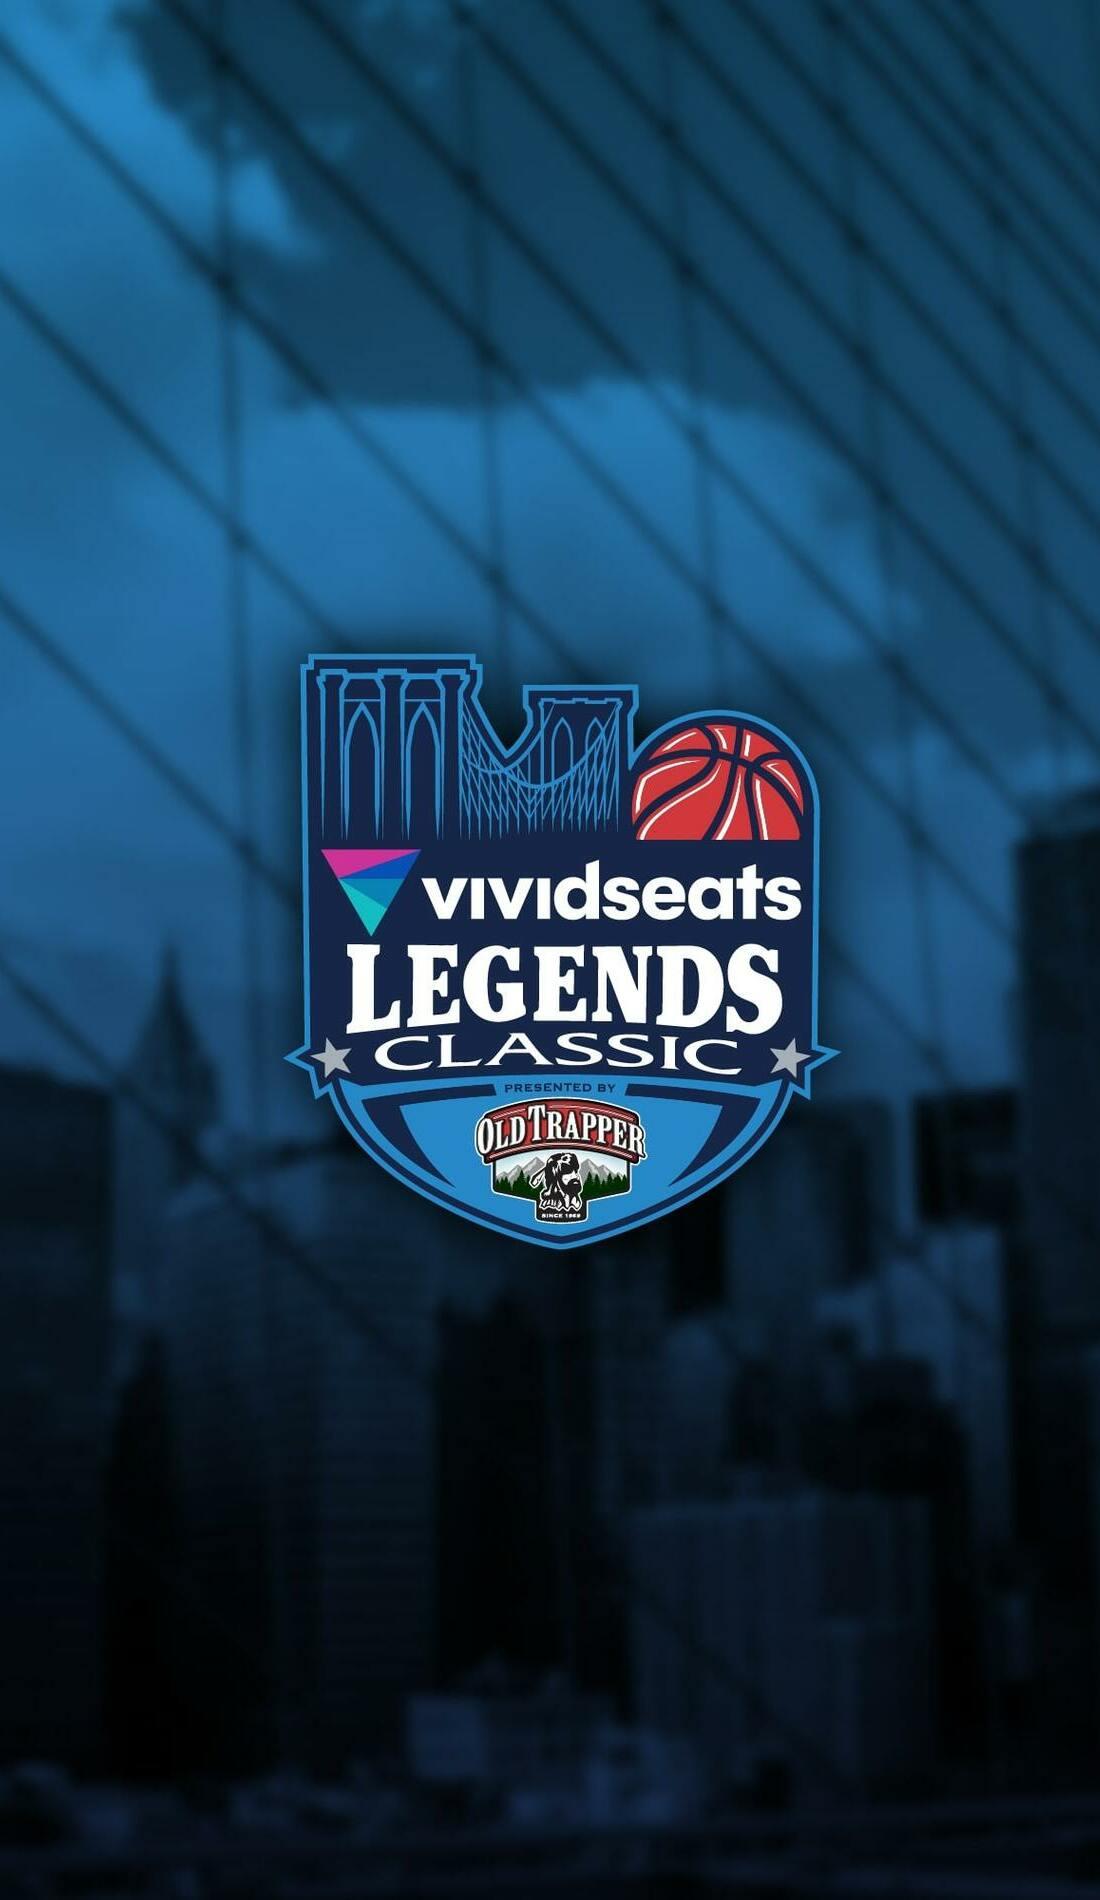 Legends of Basketball Las Vegas Invitational